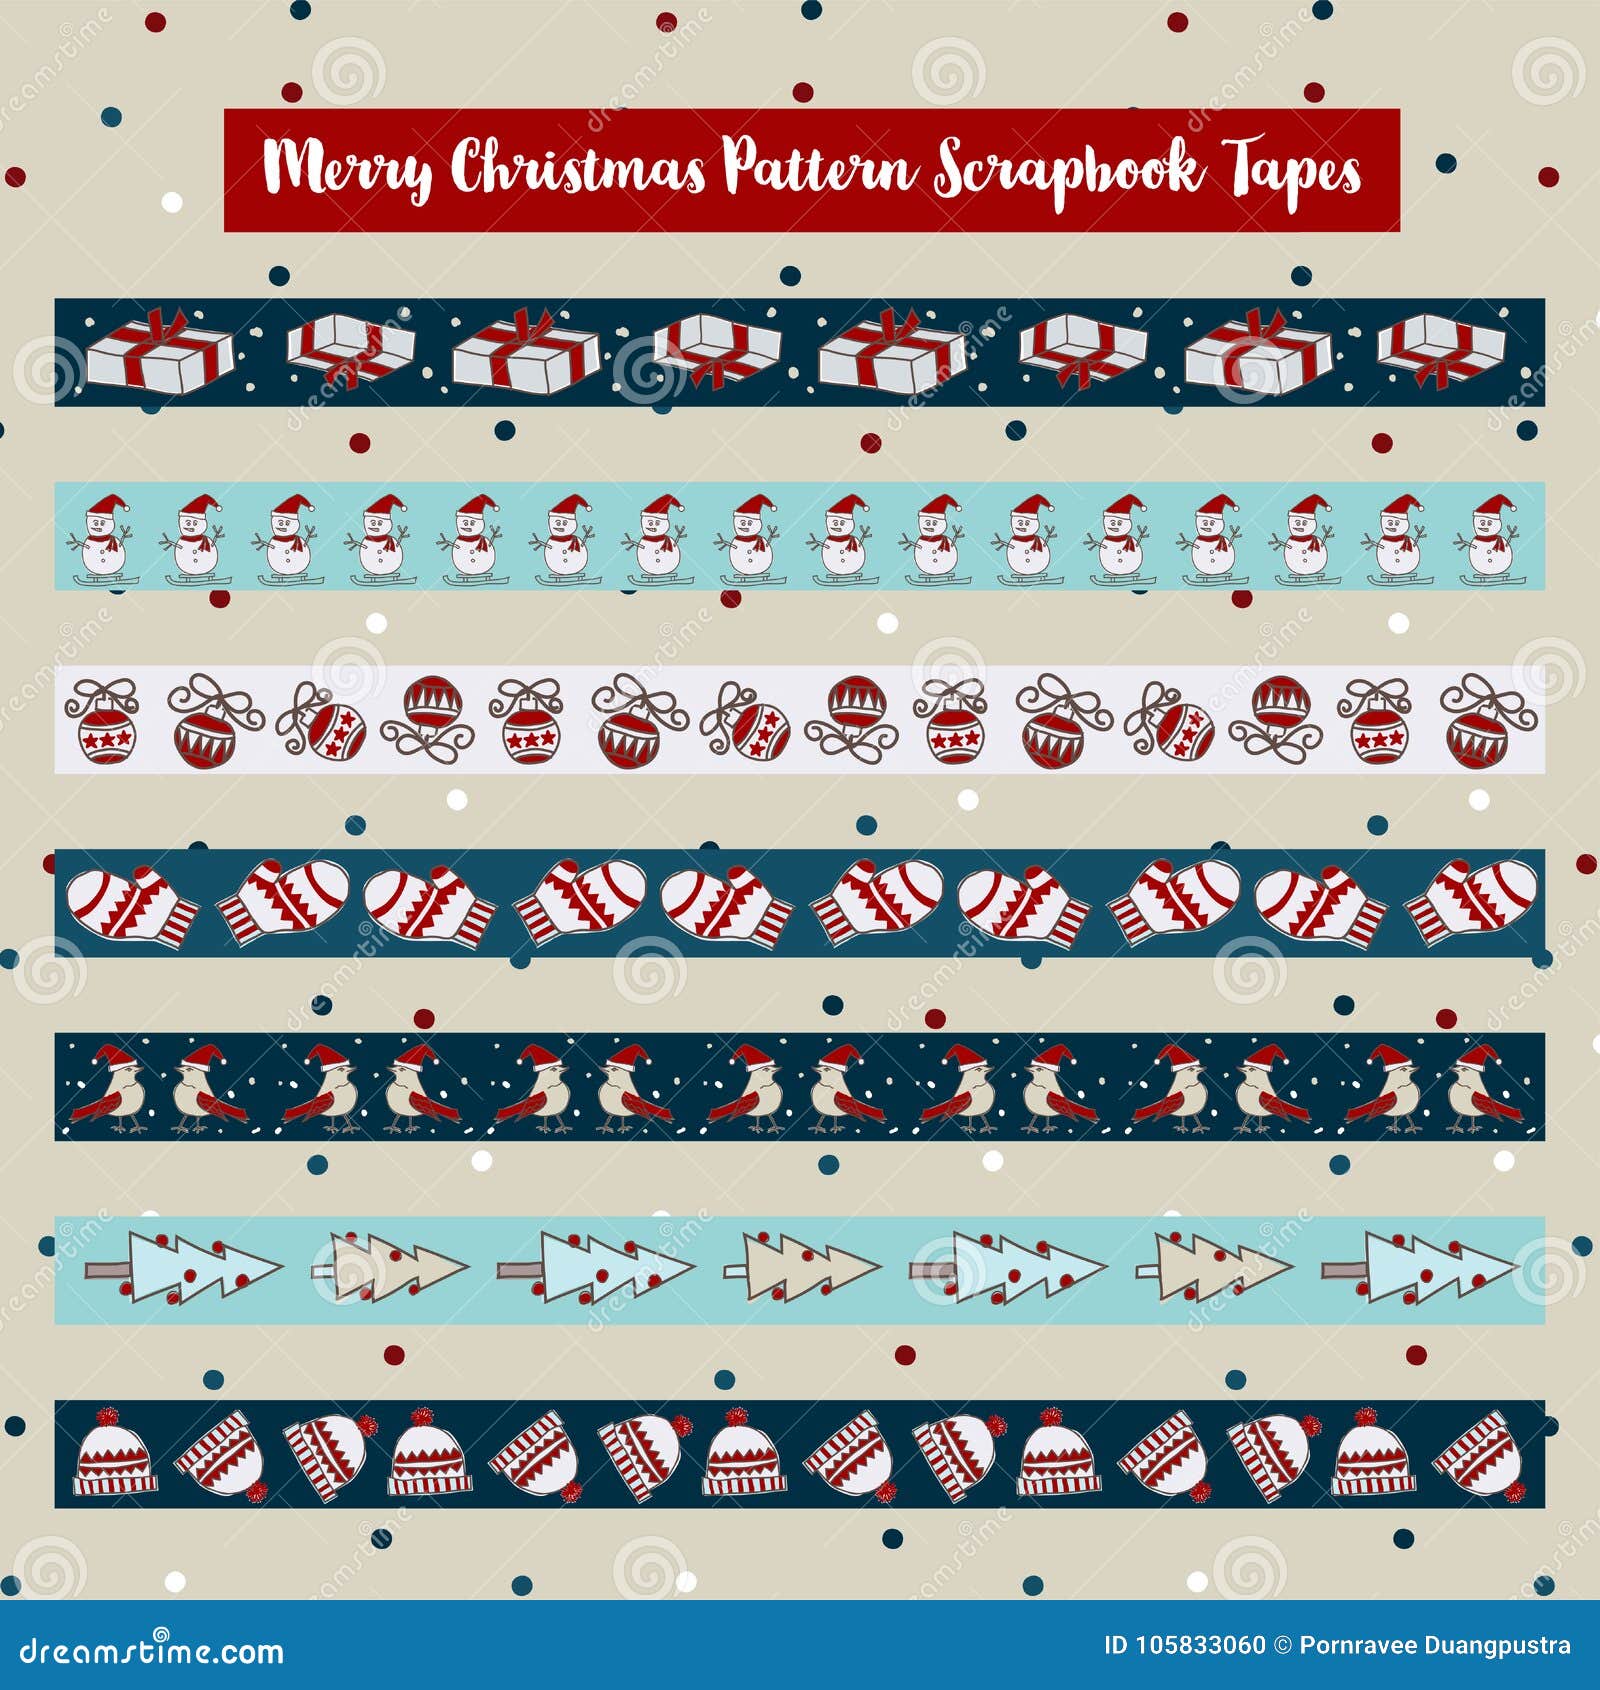 Xmas Scrapbook Tape-1 Christmas Washi Tape Cute Winter Stock